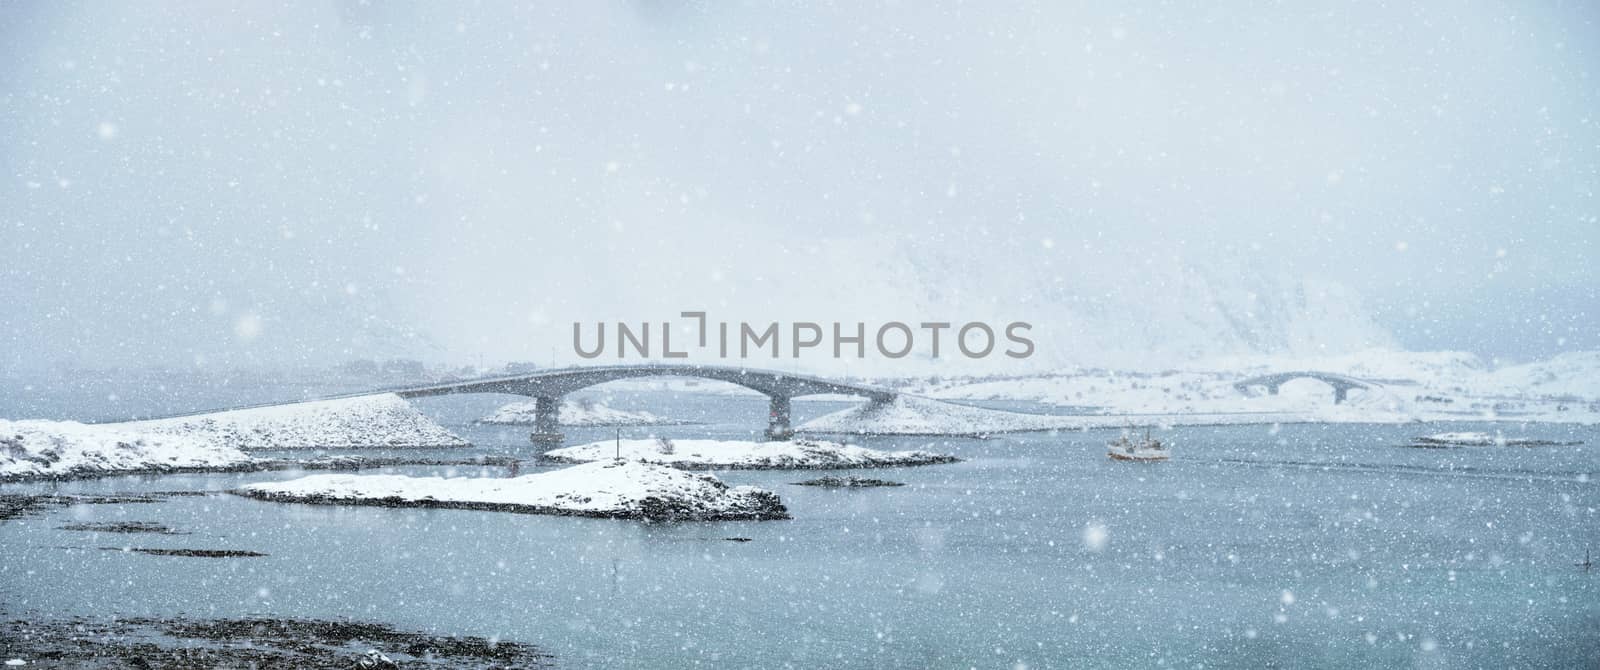 Fredvang bridges in heavy snowfall in winter with fishing ship. Lofoten islands, Norway